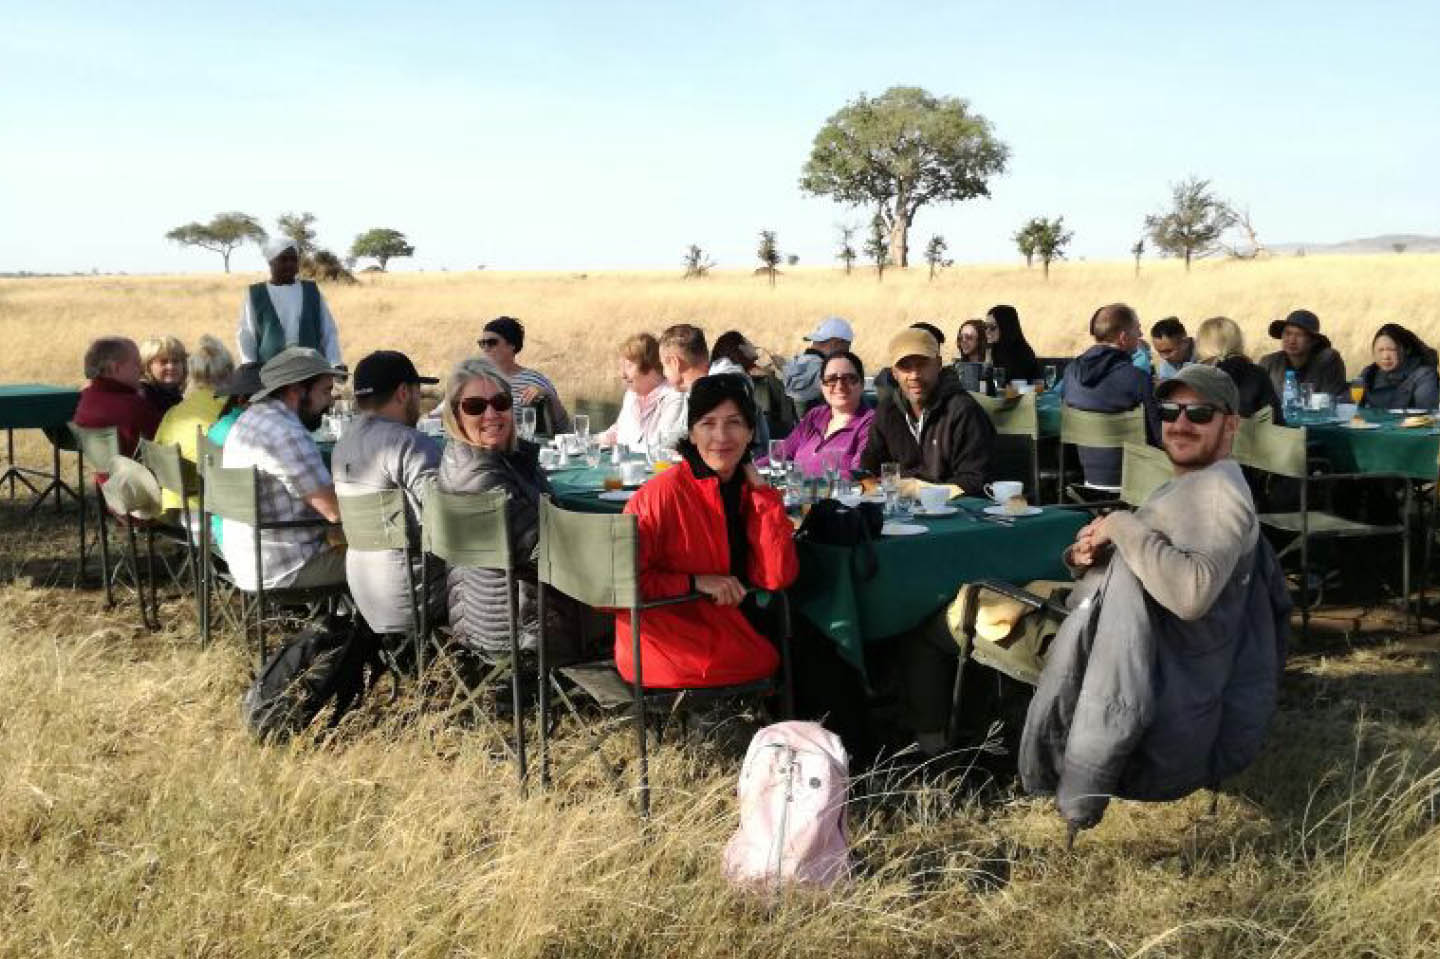 Bush breakfast after balloon safari Central Serengeti